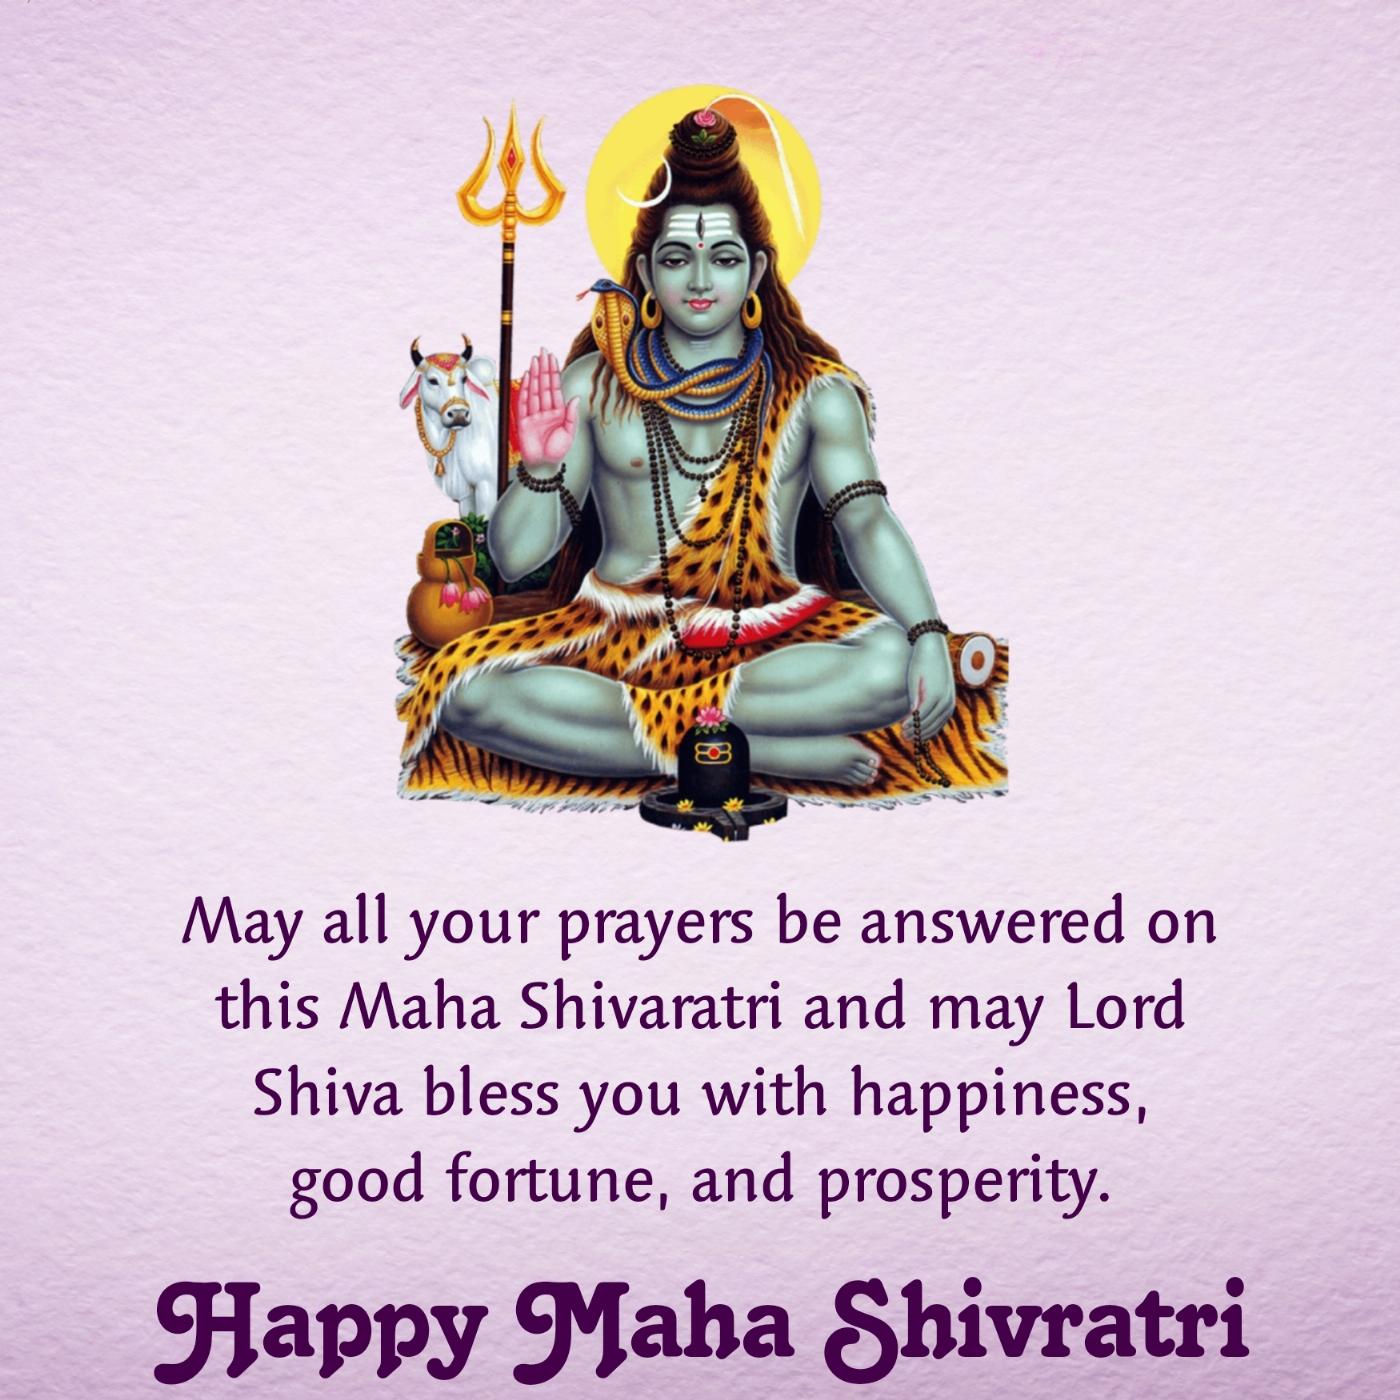 May all your prayers be answered on this Maha Shivaratri